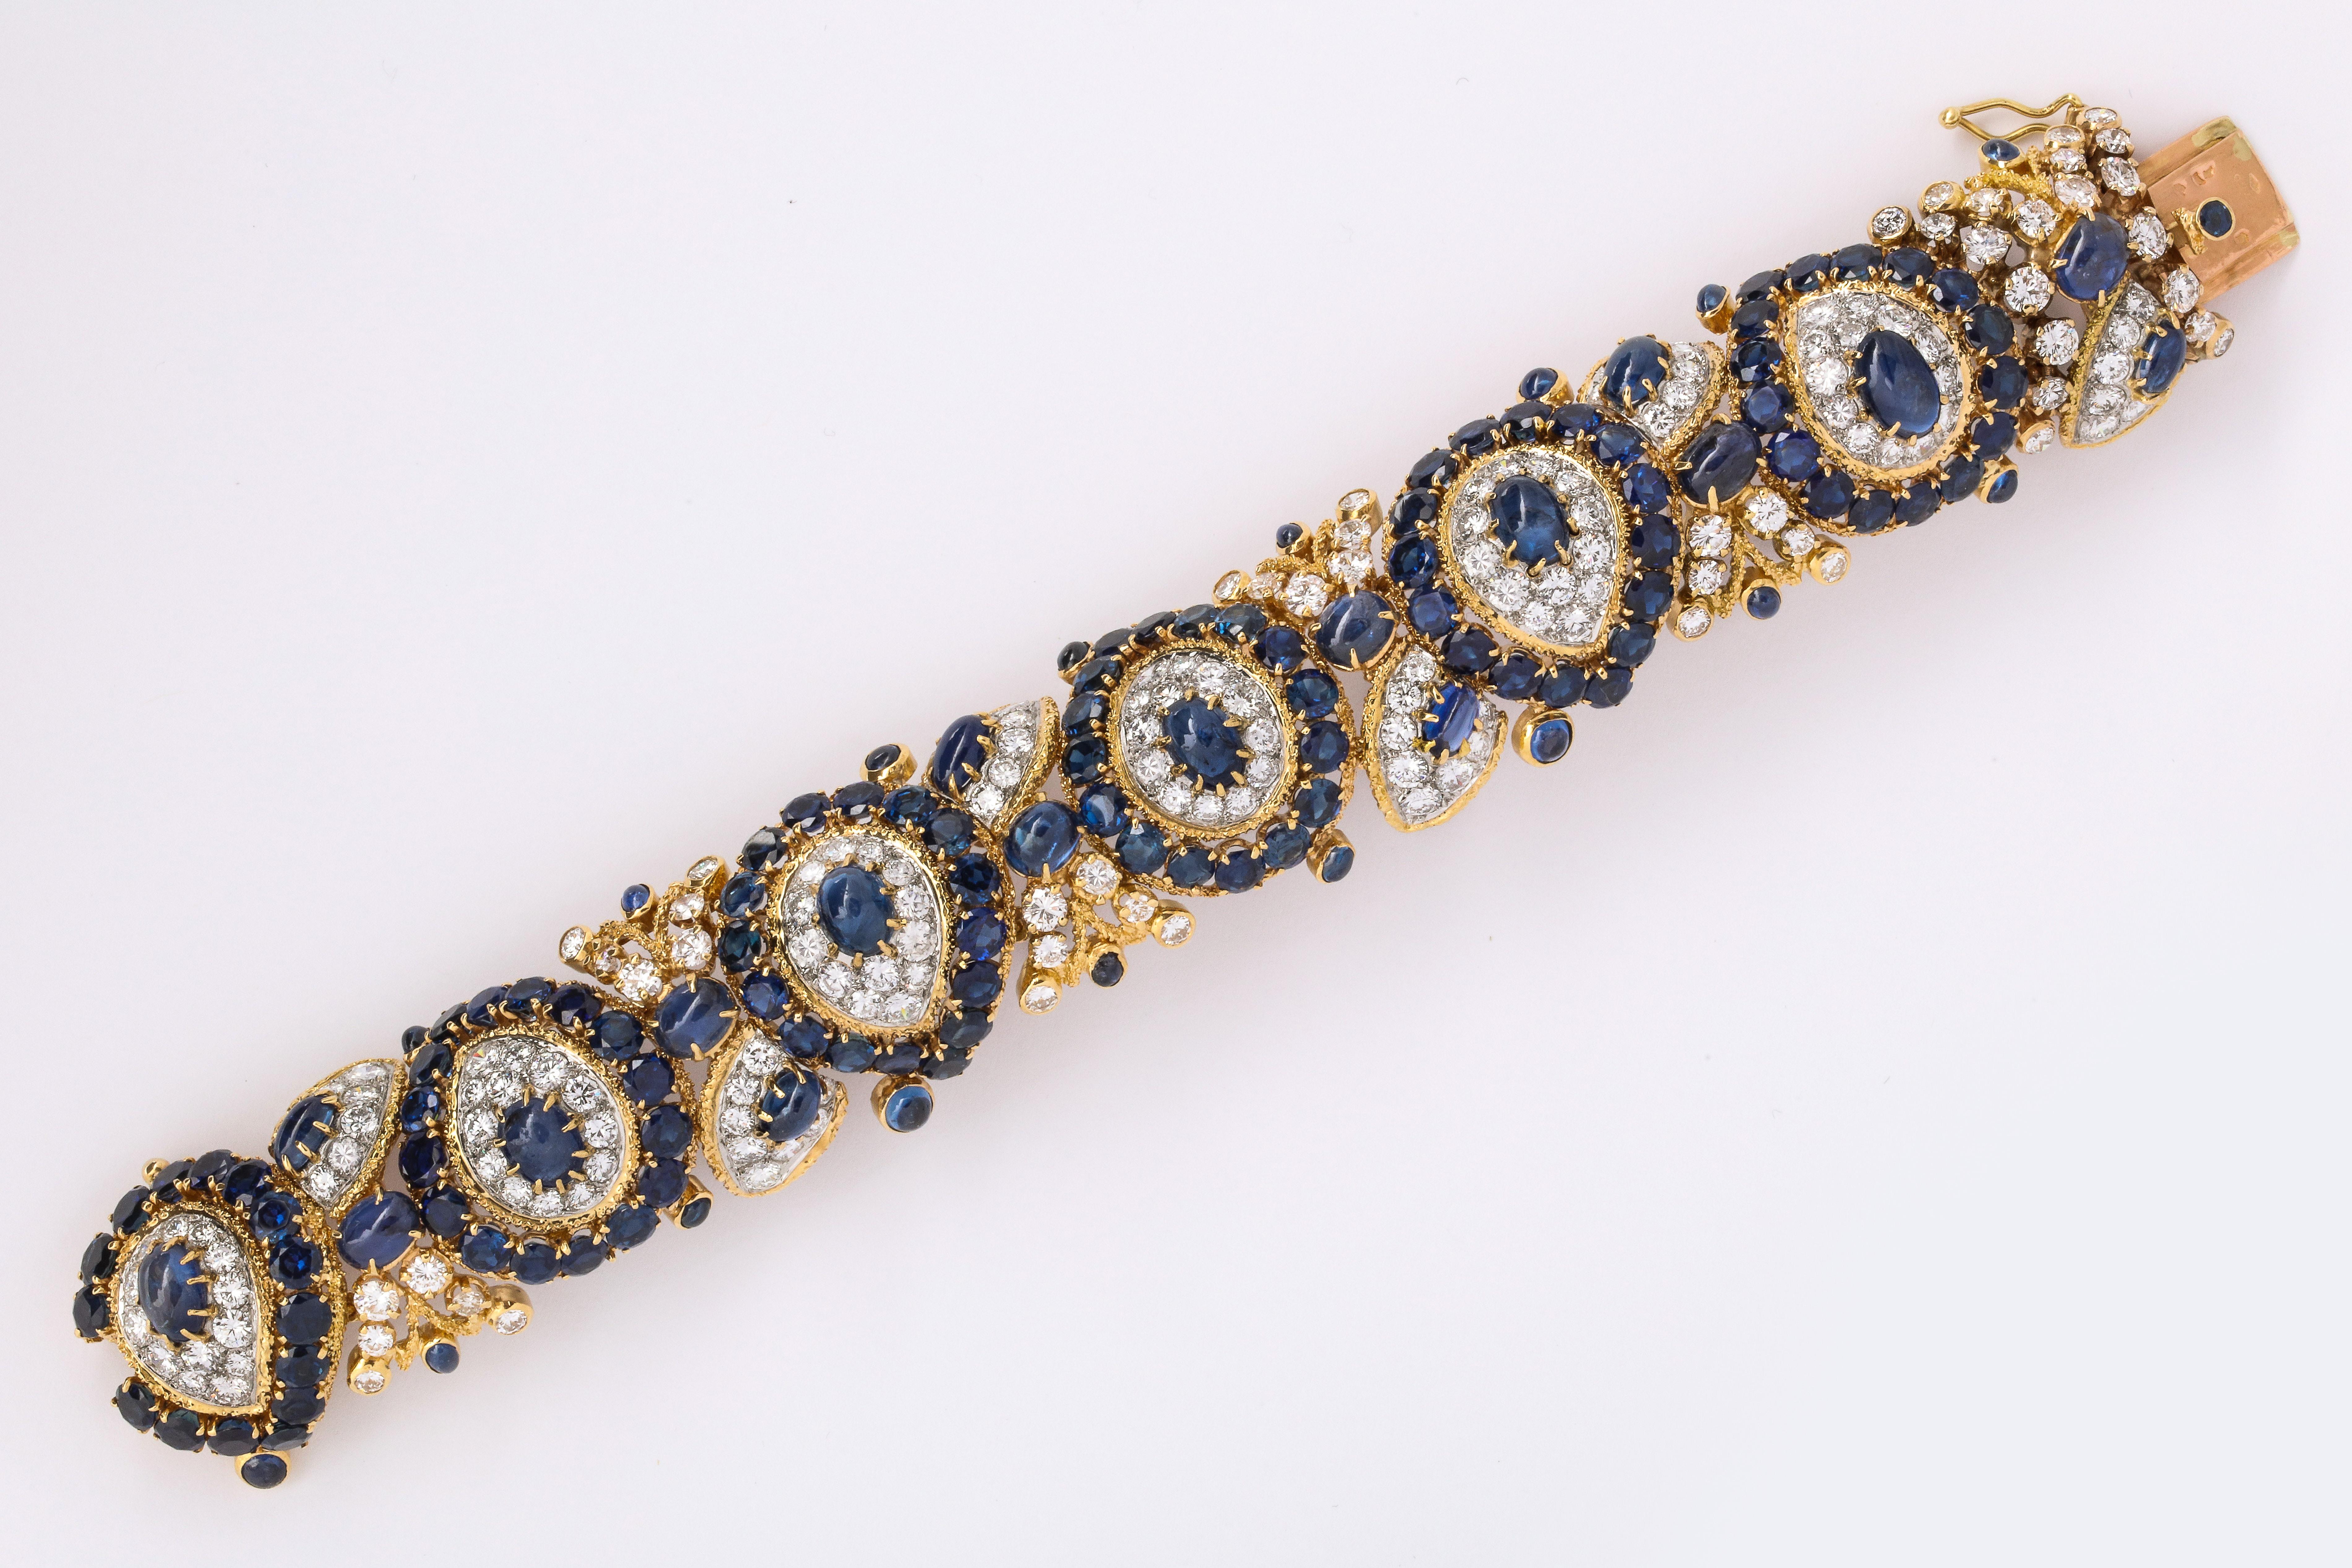 Round Cut Sapphire Bracelet by Van Cleef and Arpels